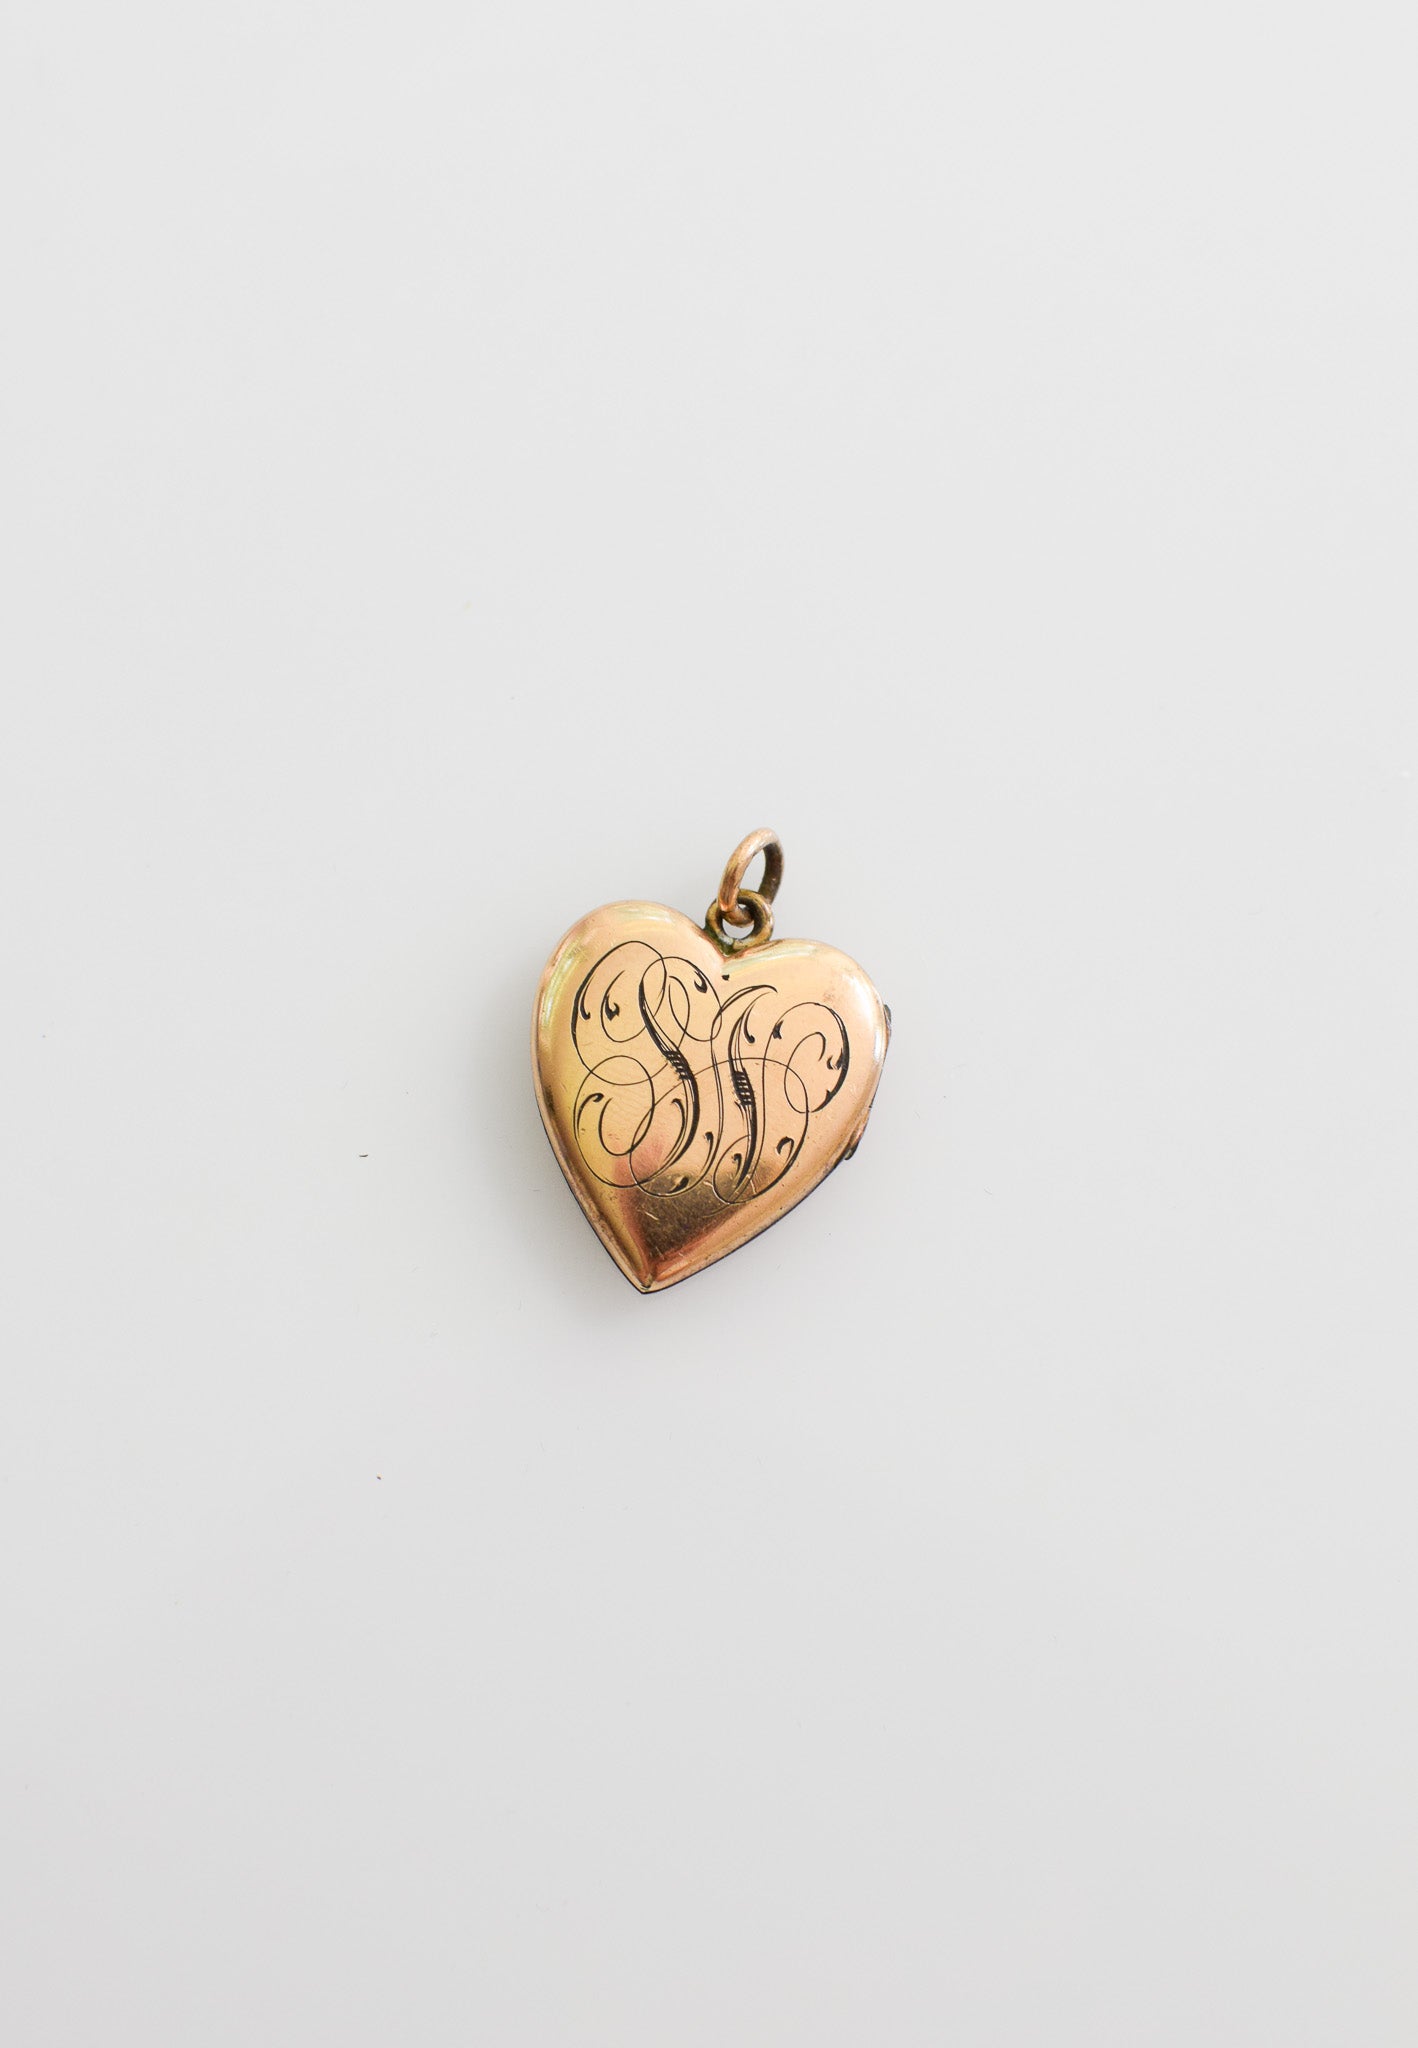 Antique Gold-Filled Heart Locket | Initials SN